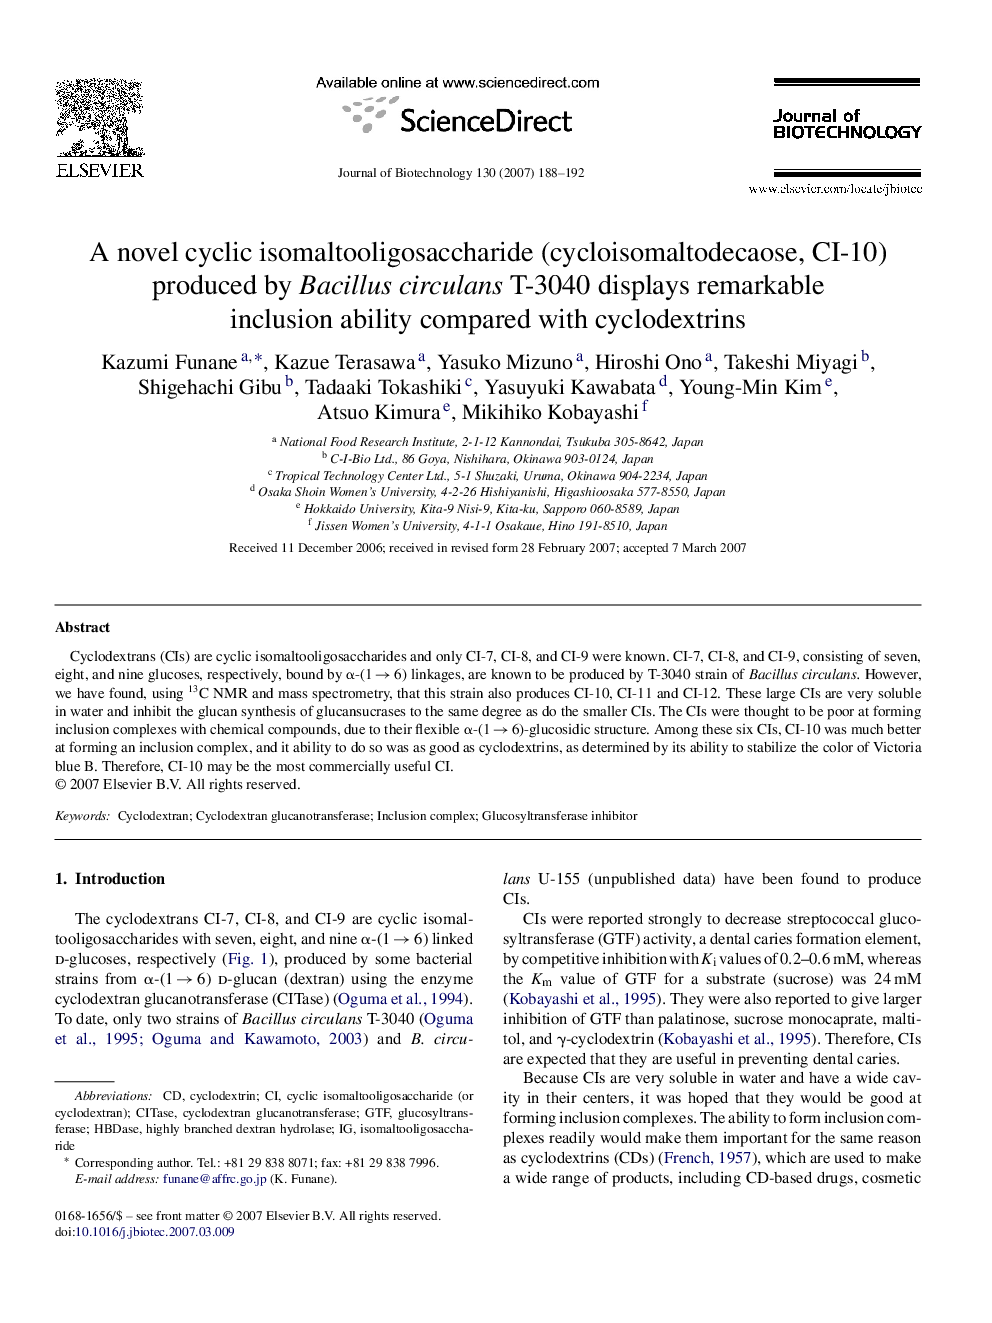 A novel cyclic isomaltooligosaccharide (cycloisomaltodecaose, CI-10) produced by Bacillus circulans T-3040 displays remarkable inclusion ability compared with cyclodextrins